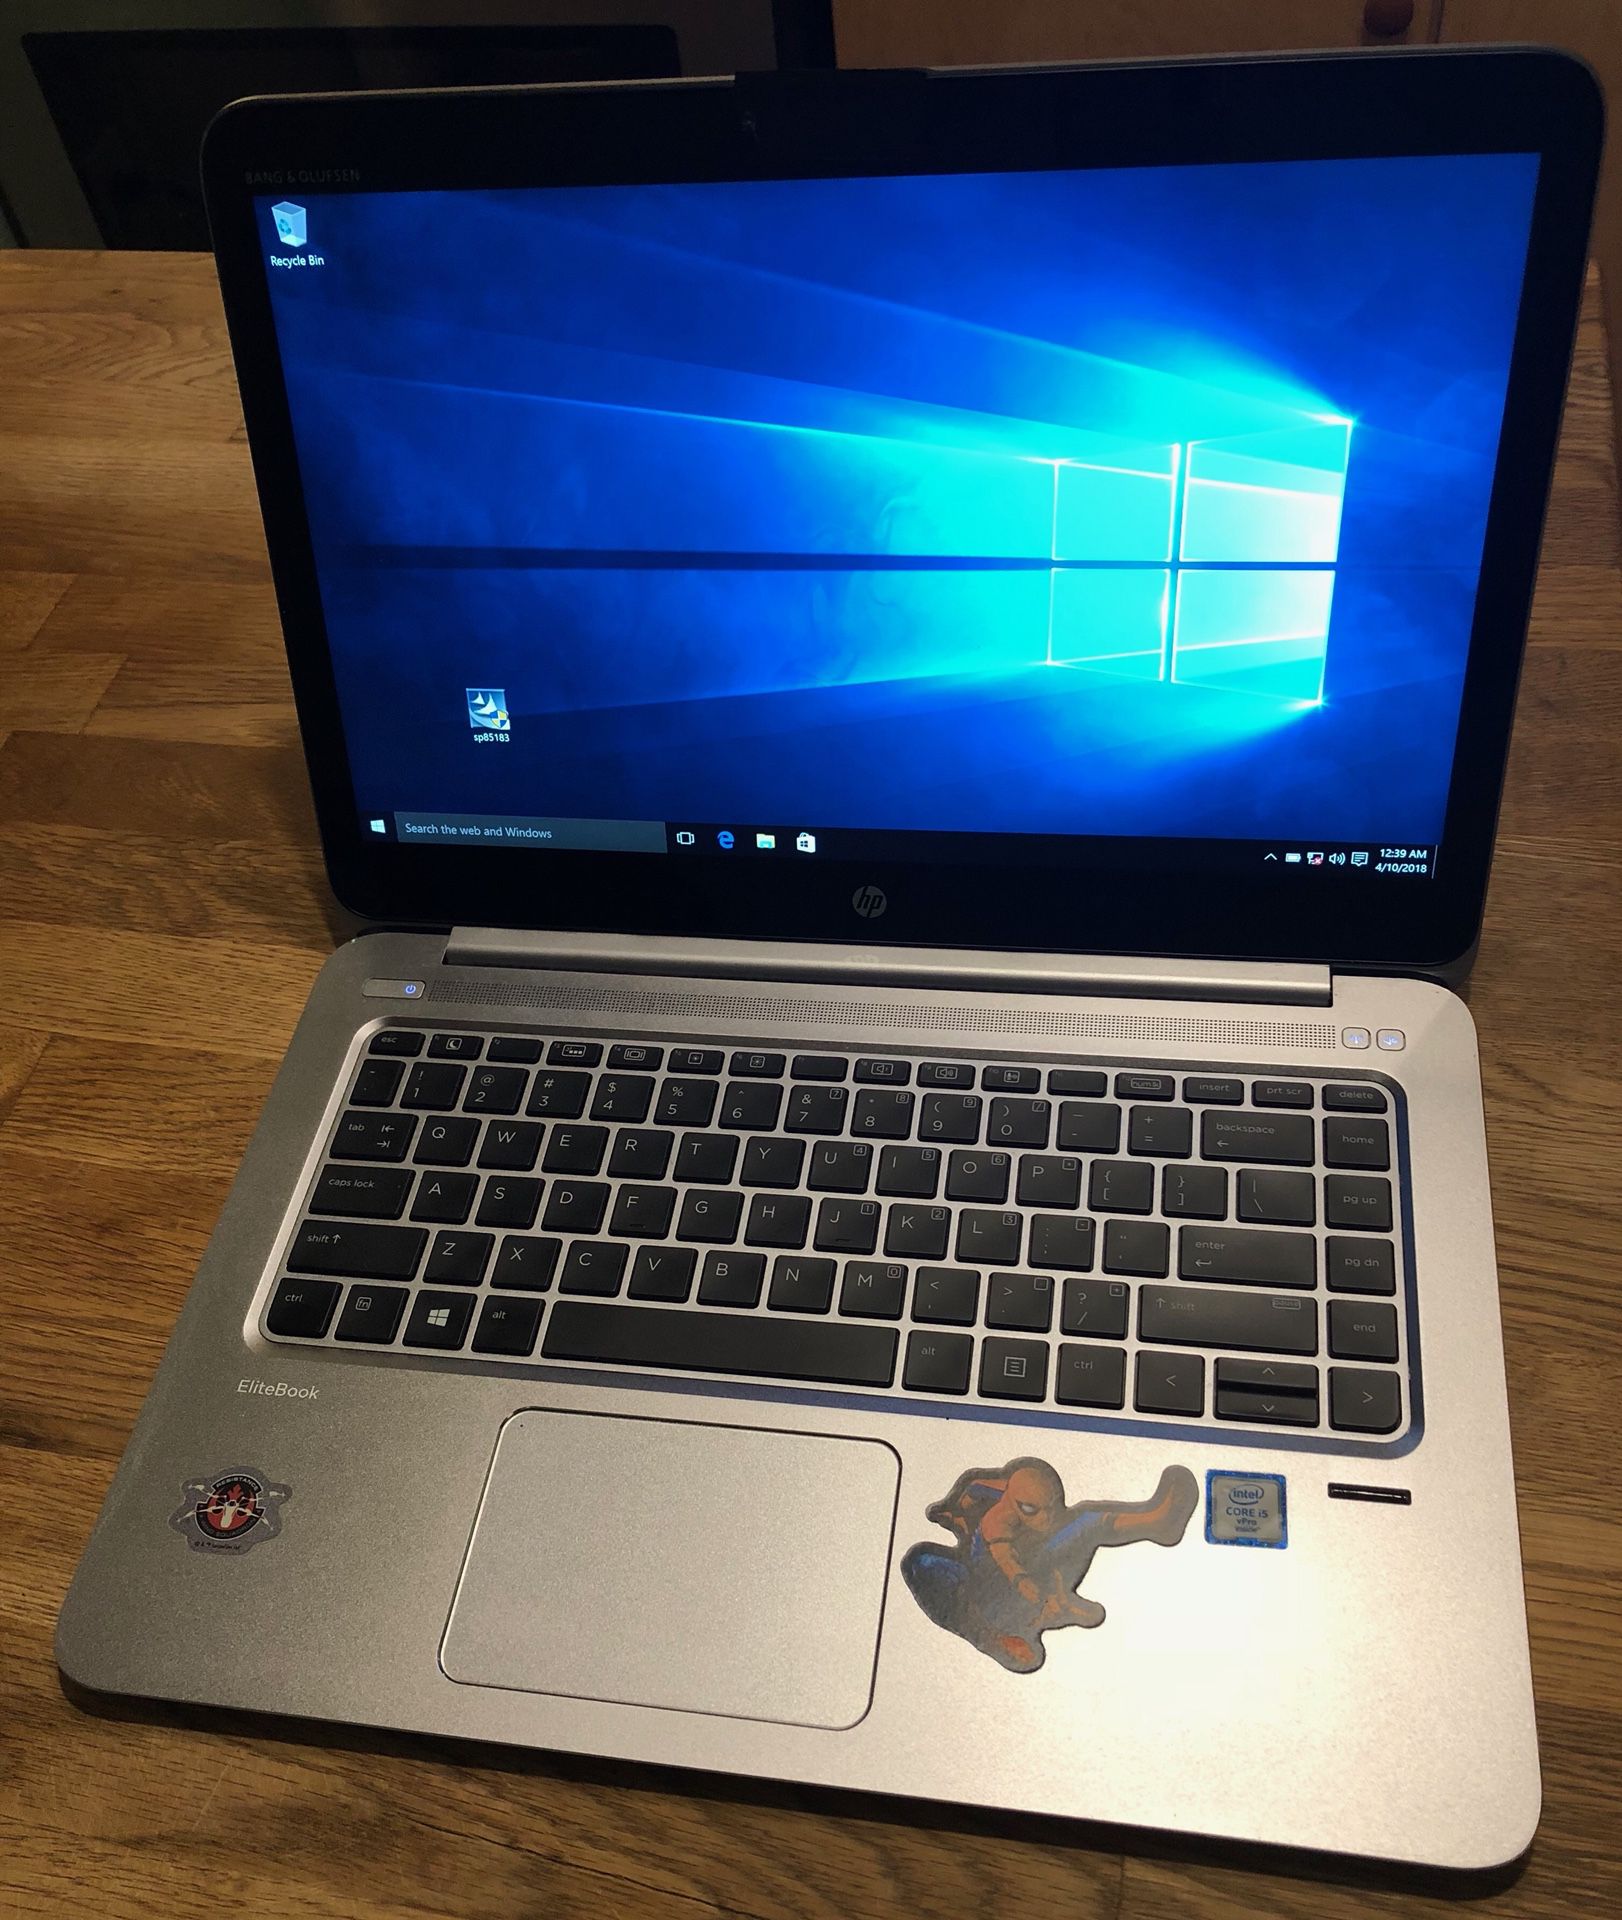 HP EliteBook 1040 G3 Notebook